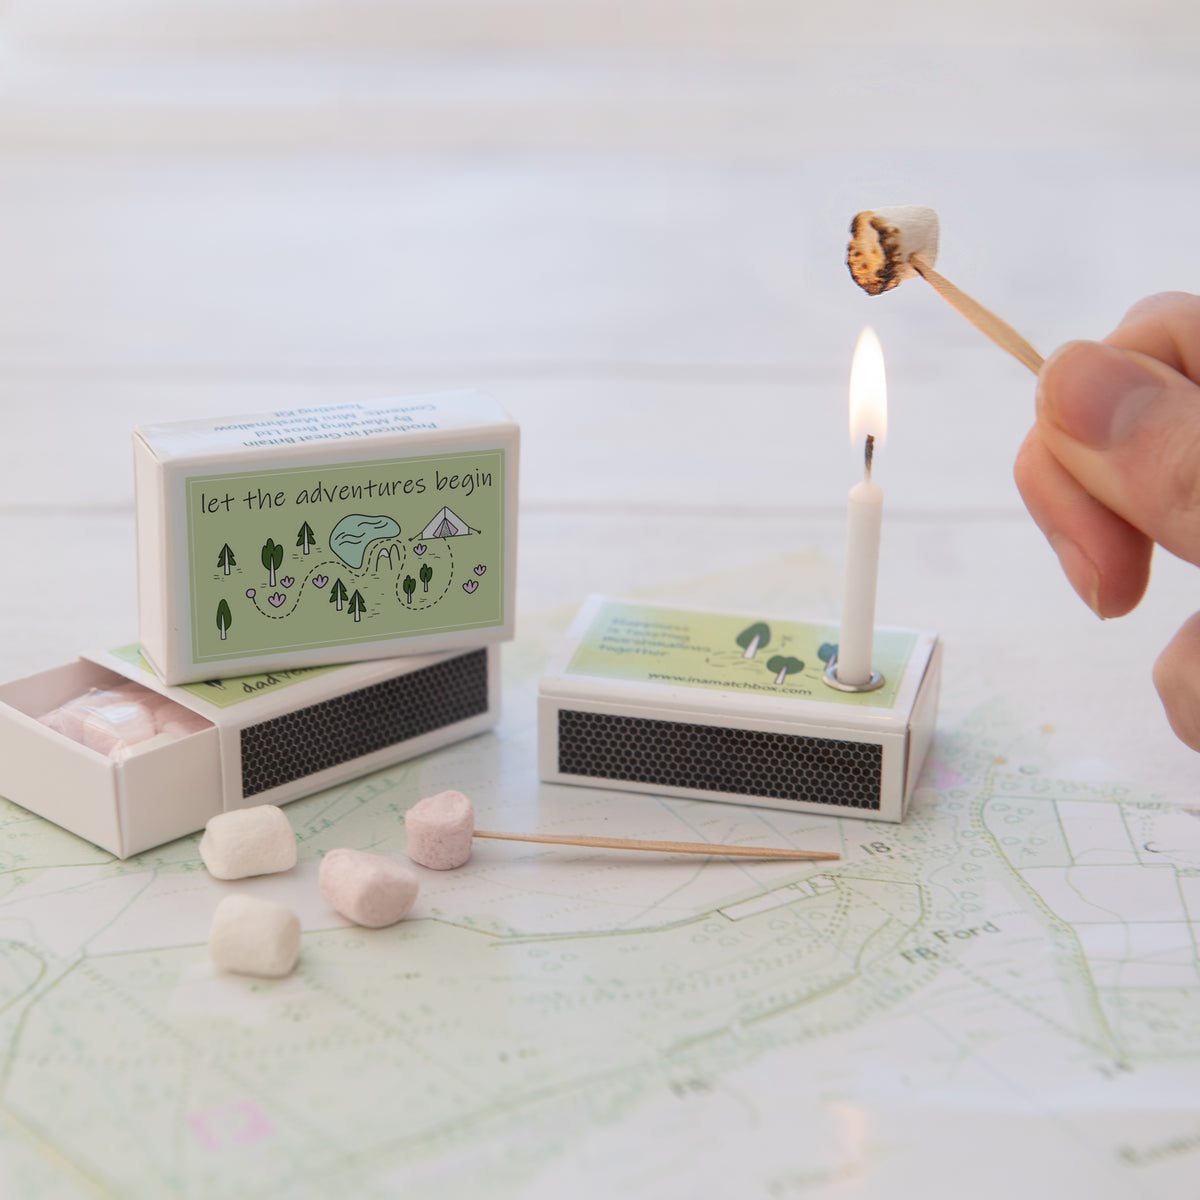 Mini Marshmallow Toasting Kit